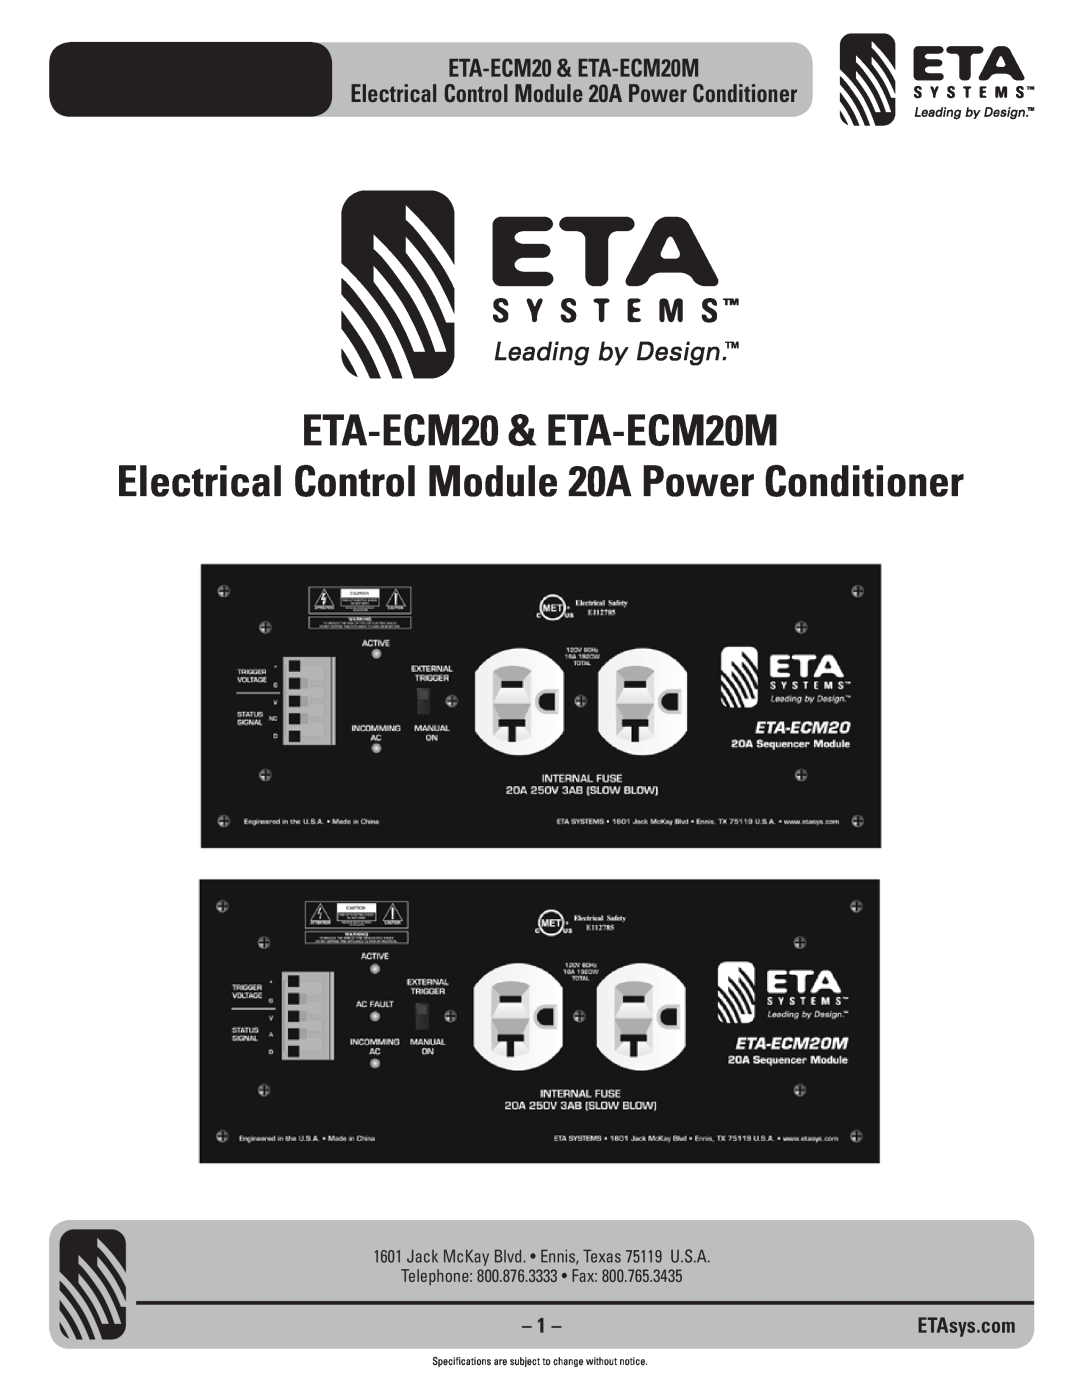 ETA Systems specifications ETA-ECM20 & ETA-ECM20M, Electrical Control Module 20A Power Conditioner, ETAsys.com 